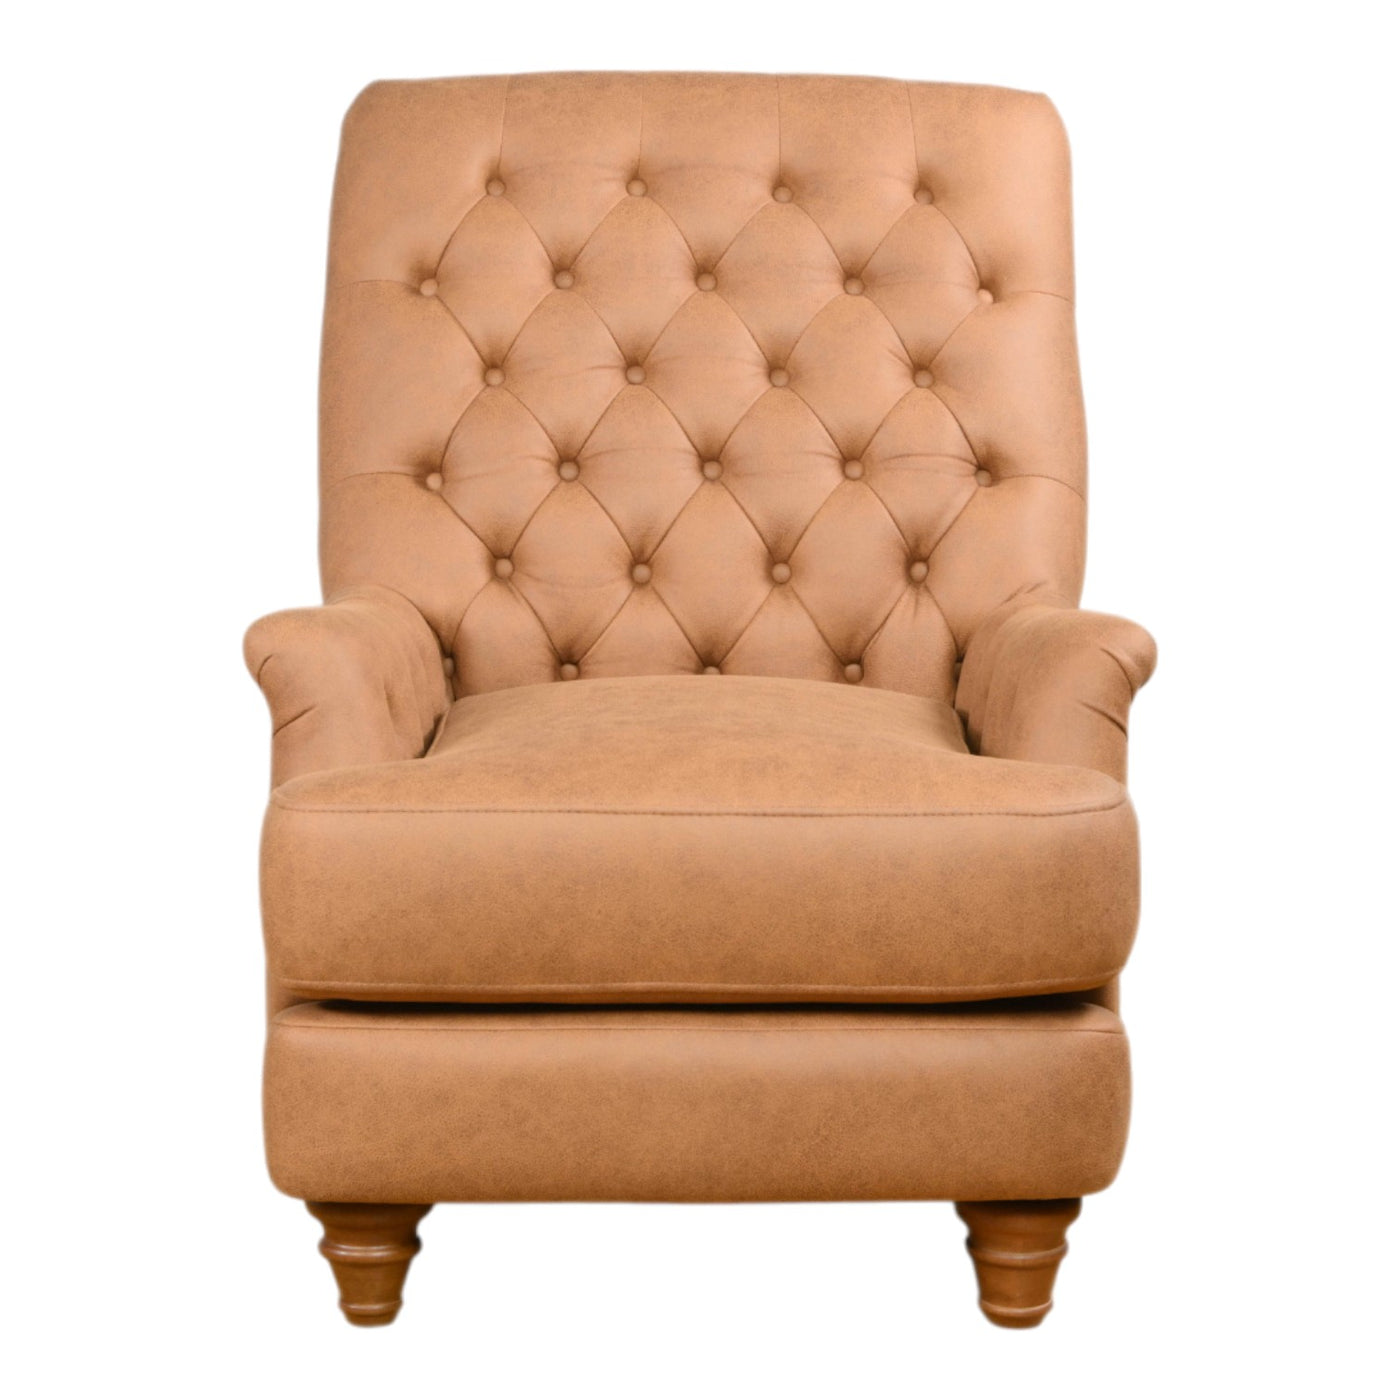 Buckingham Chair Tan Leather Look